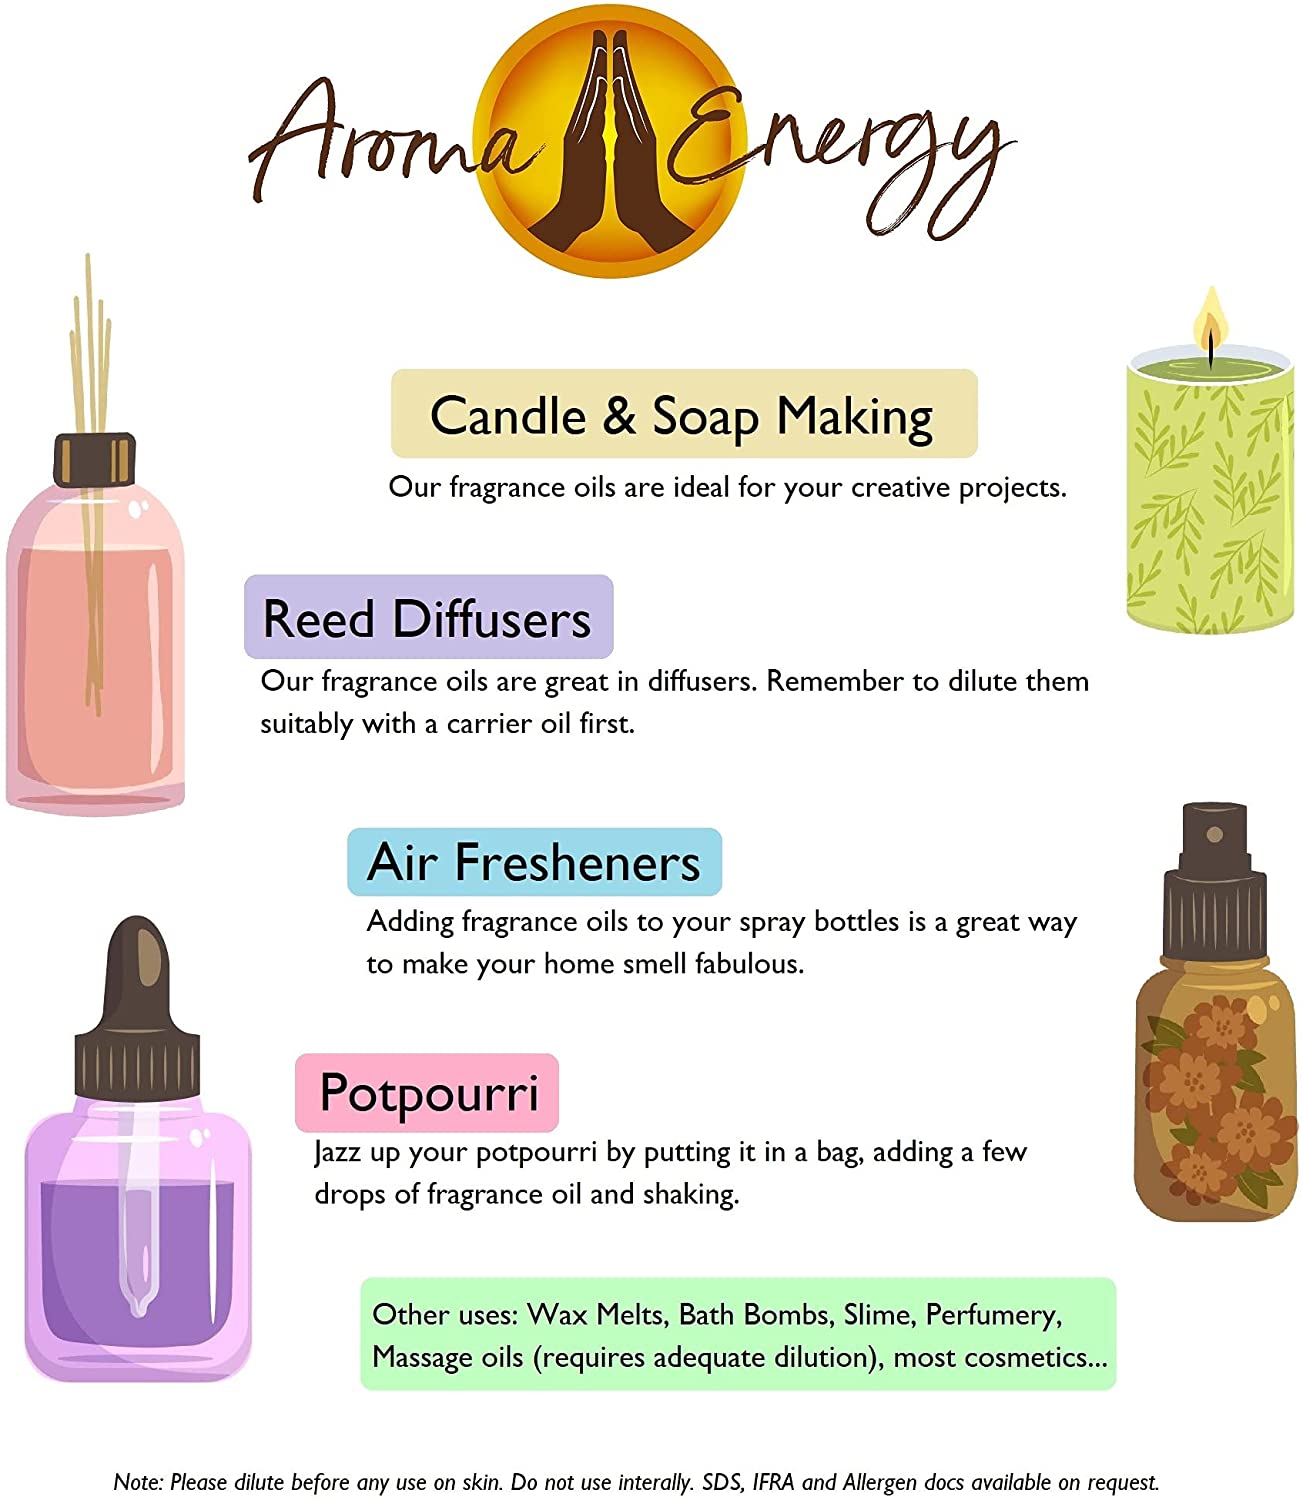 Vanilla & Coconut Fragrance Oil - Aroma Energy